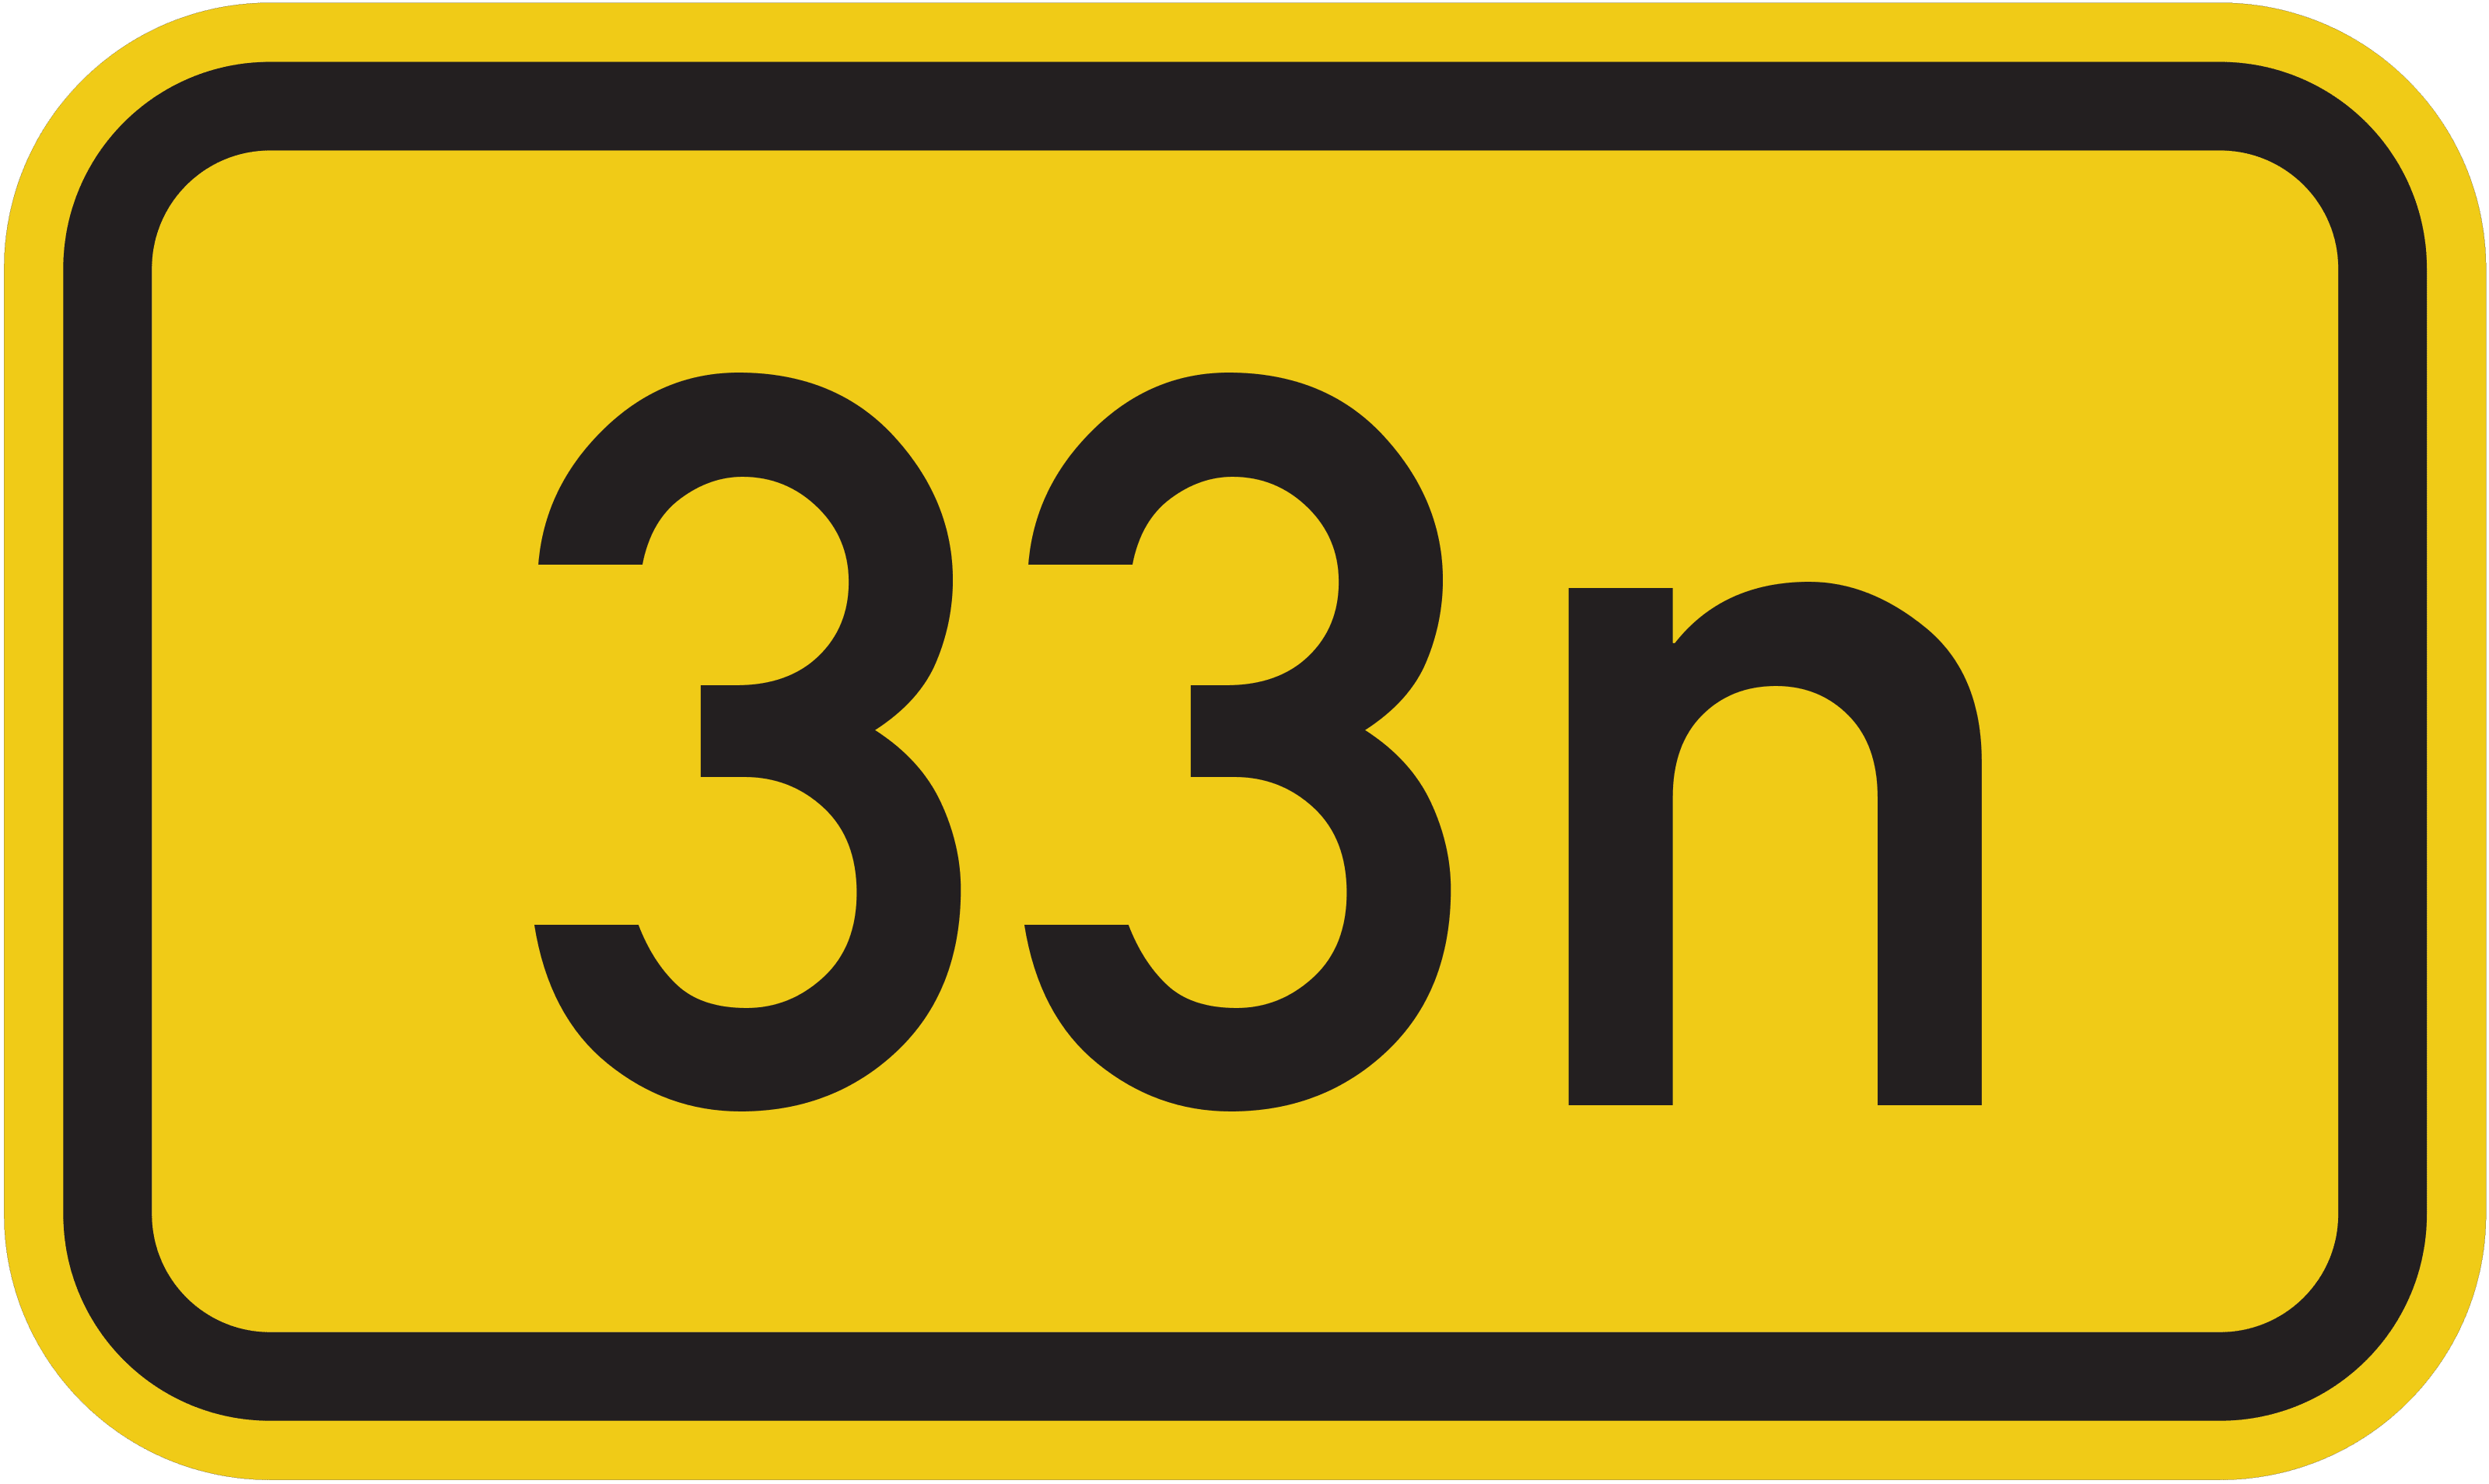 Bundesstraße B 33n